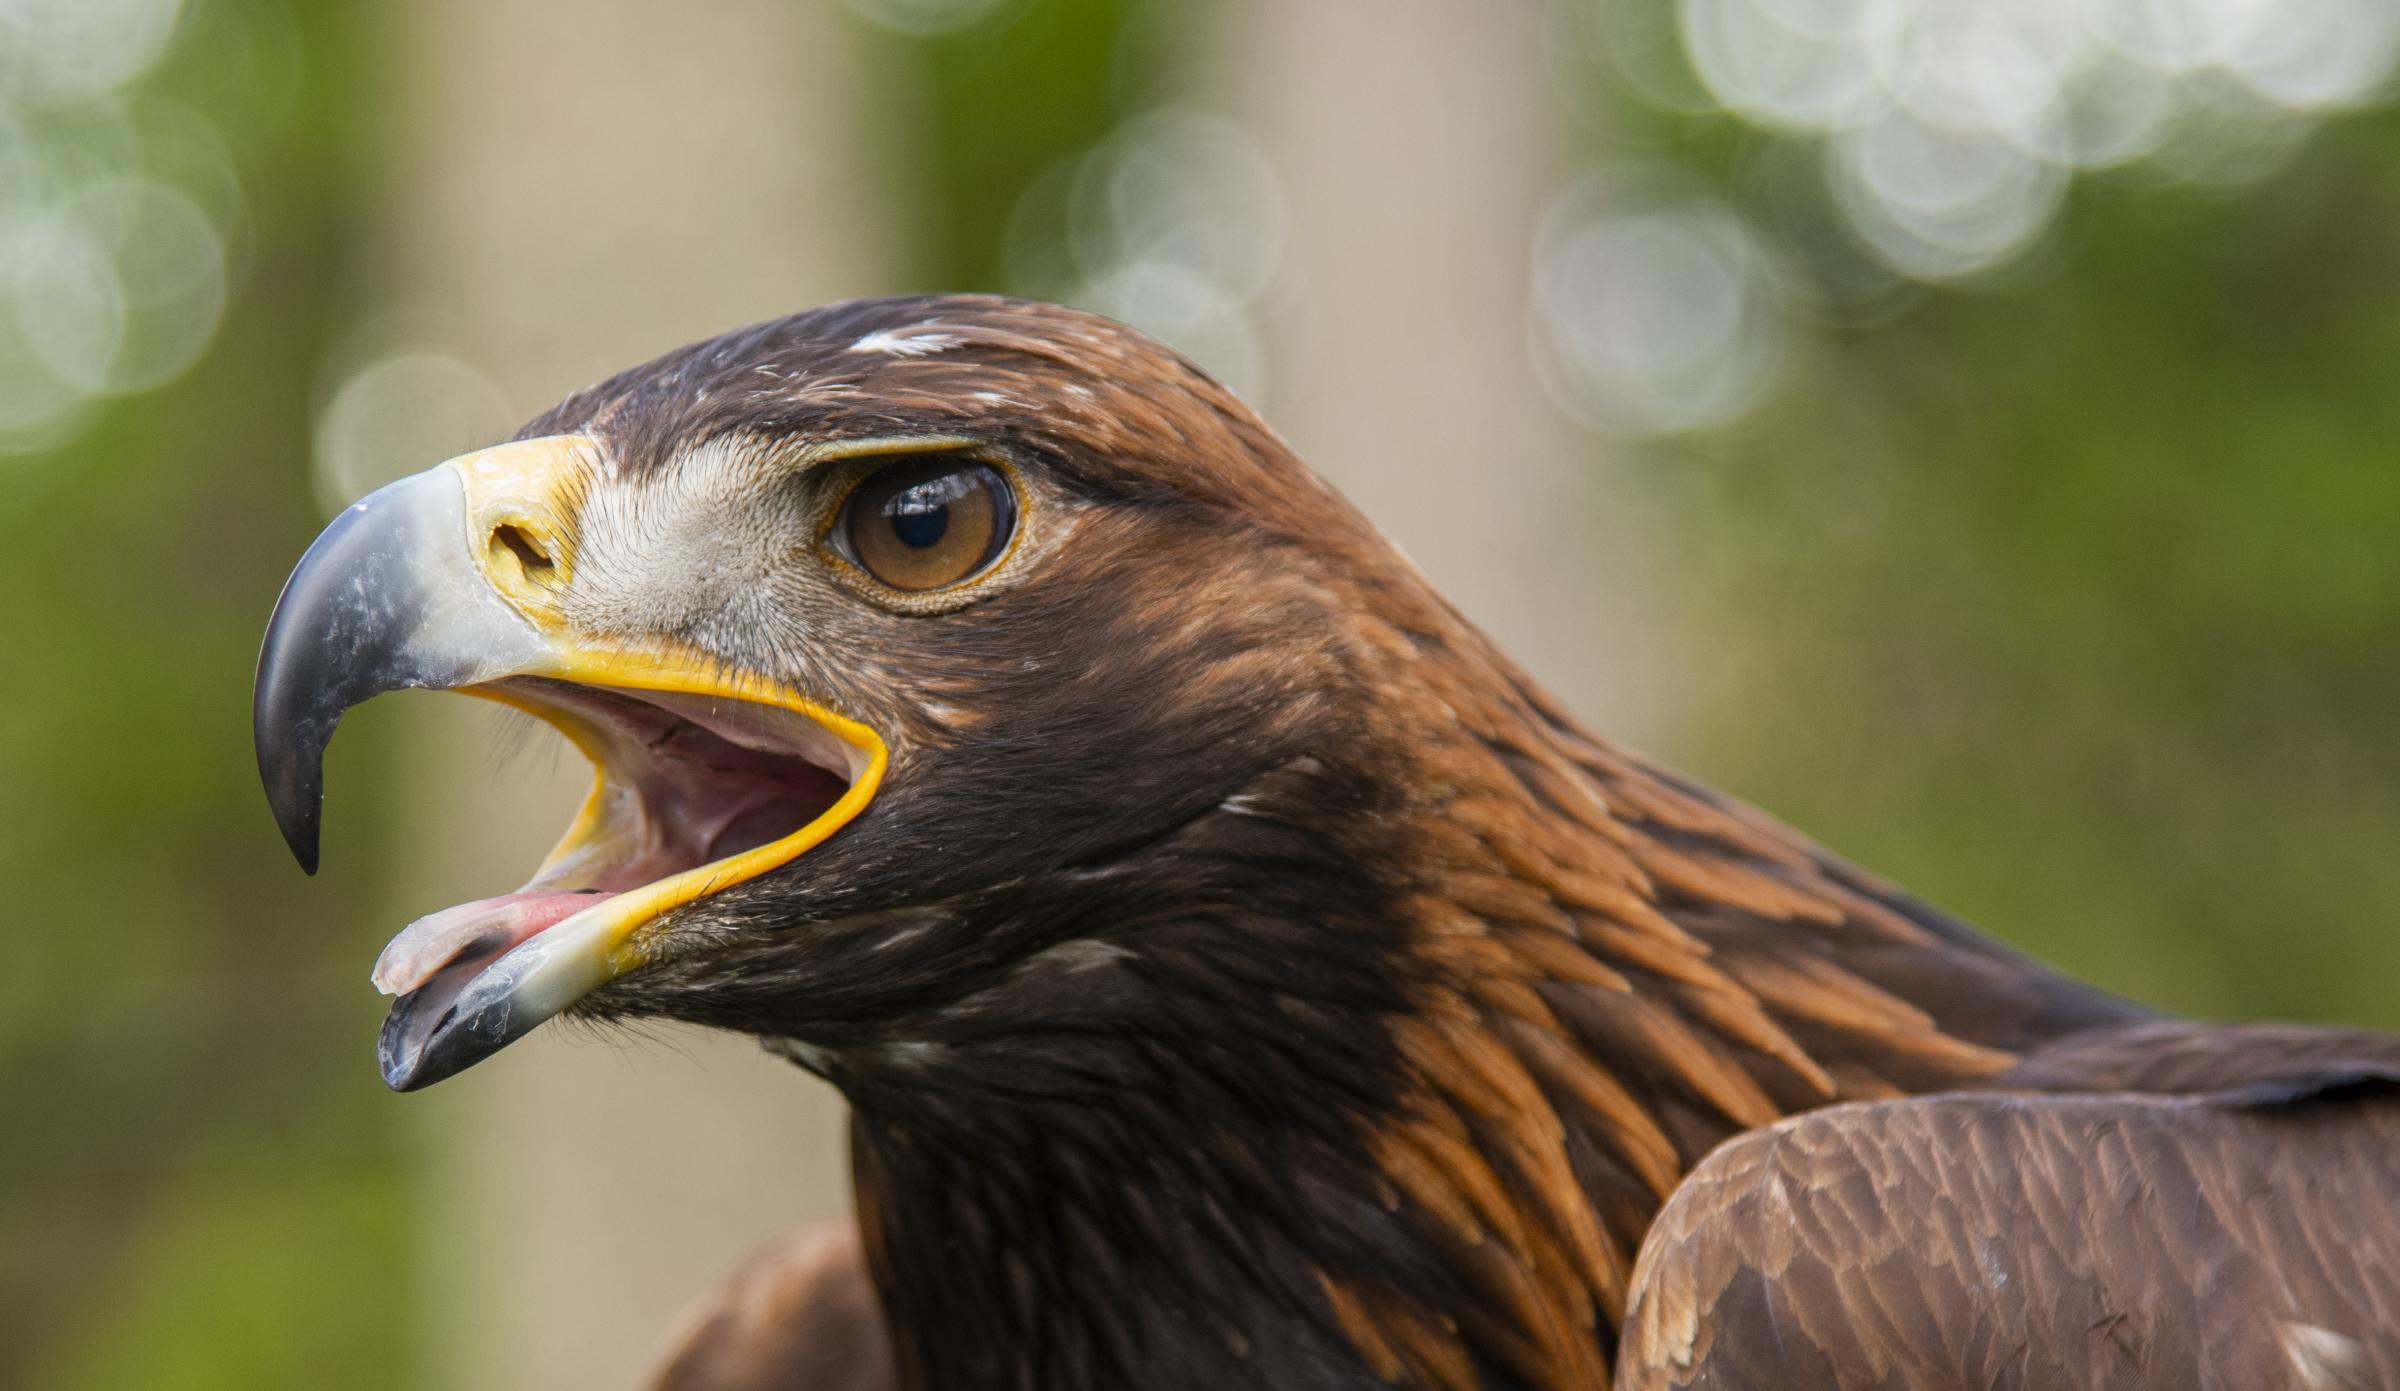 Golden Eagle 'intentionally poisoned' found dead on Aberdeenshire estate